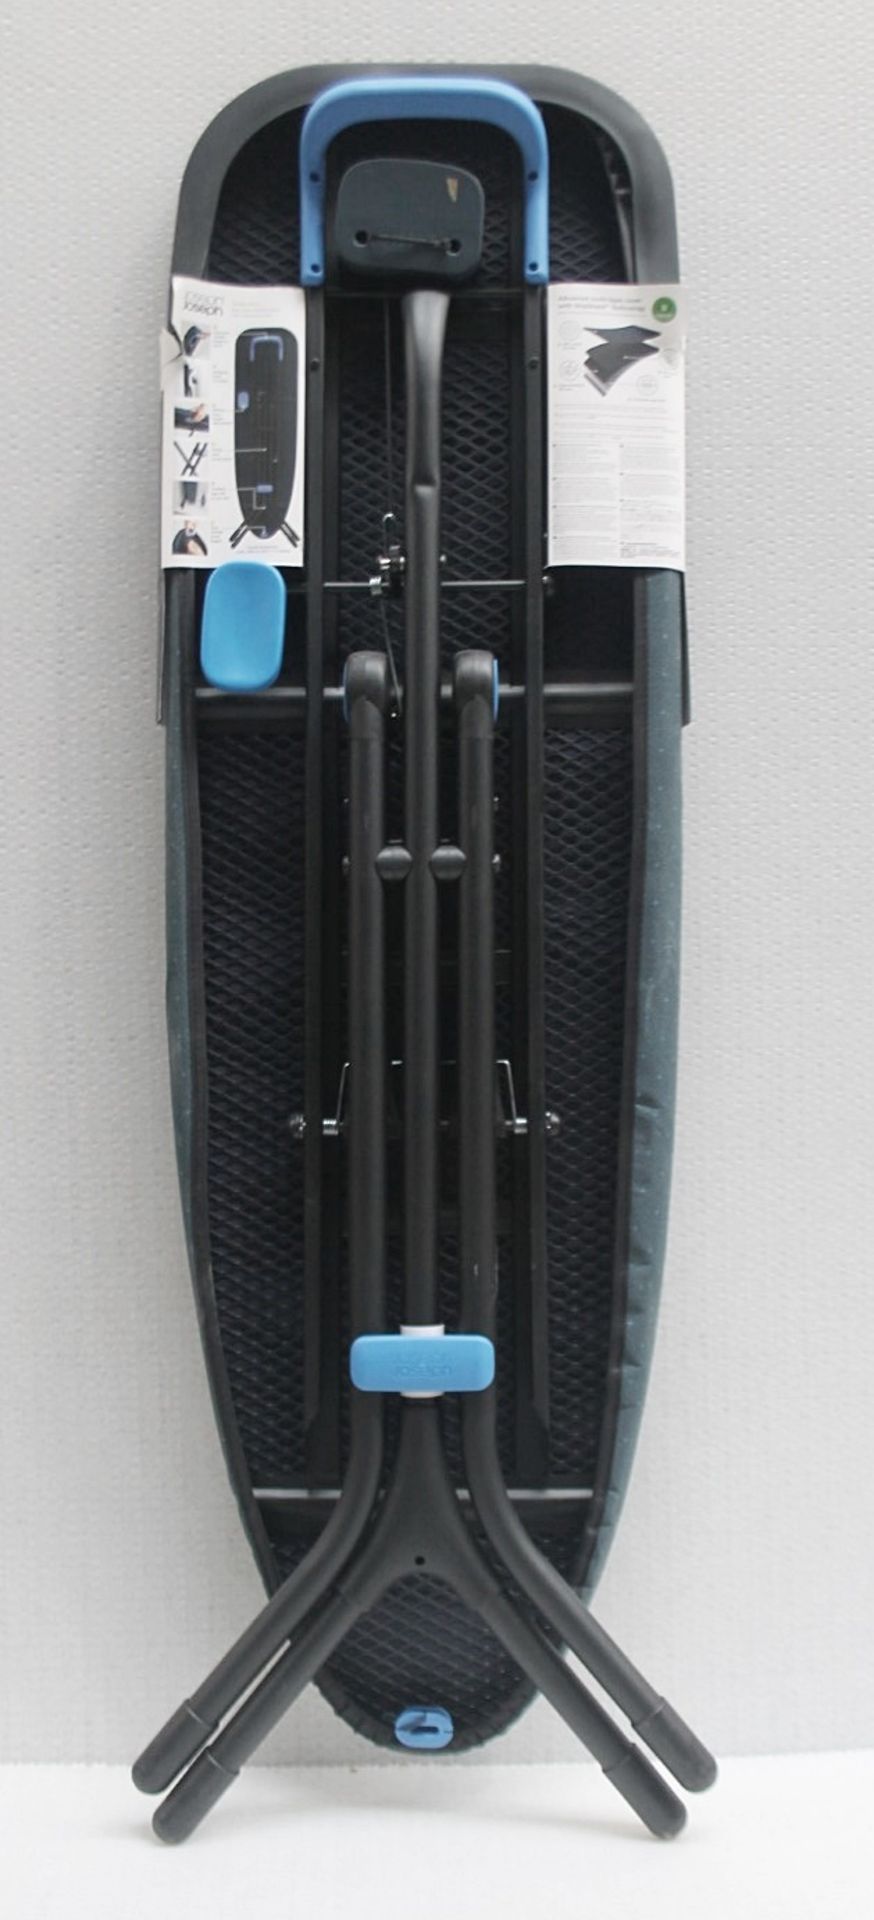 1 x JOSEPH JOSEPH Streamline Glide Plus Ironing Board With DripShield Technology - RRP £140.00 - Image 5 of 11